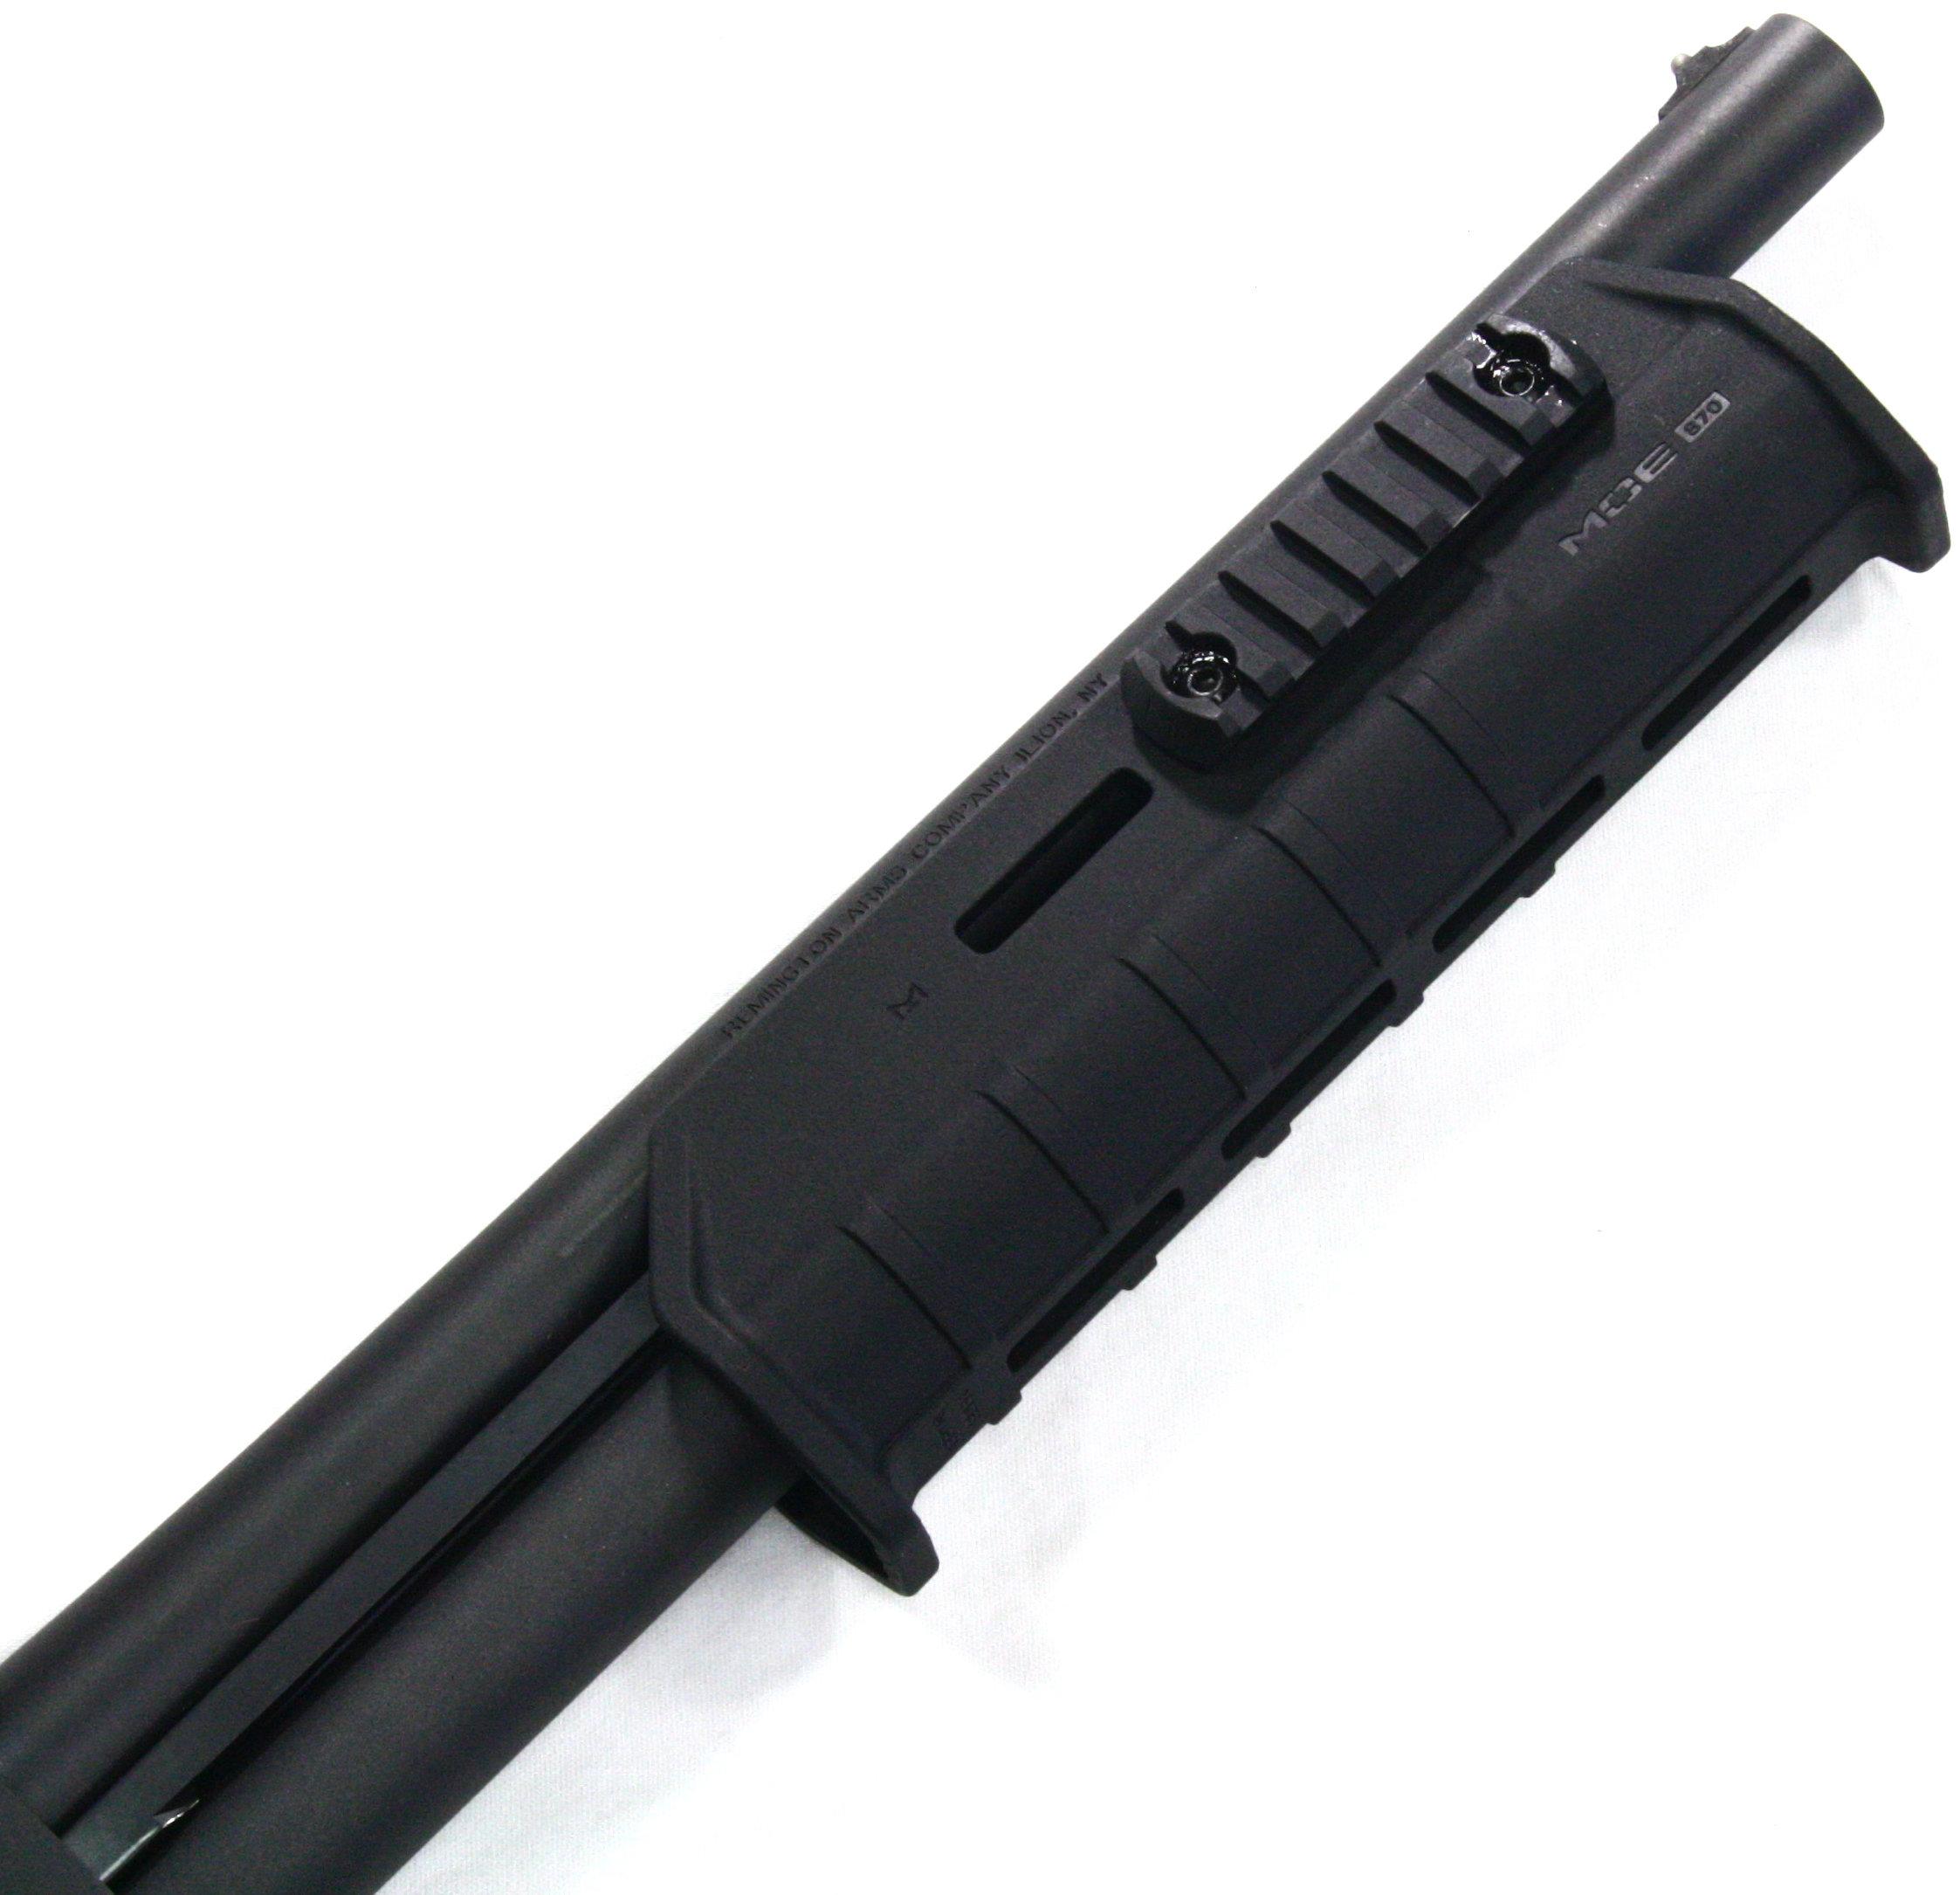 New-in-the-box Remington 870 TAC-14 pump-action shotgun pistol, 12 ga